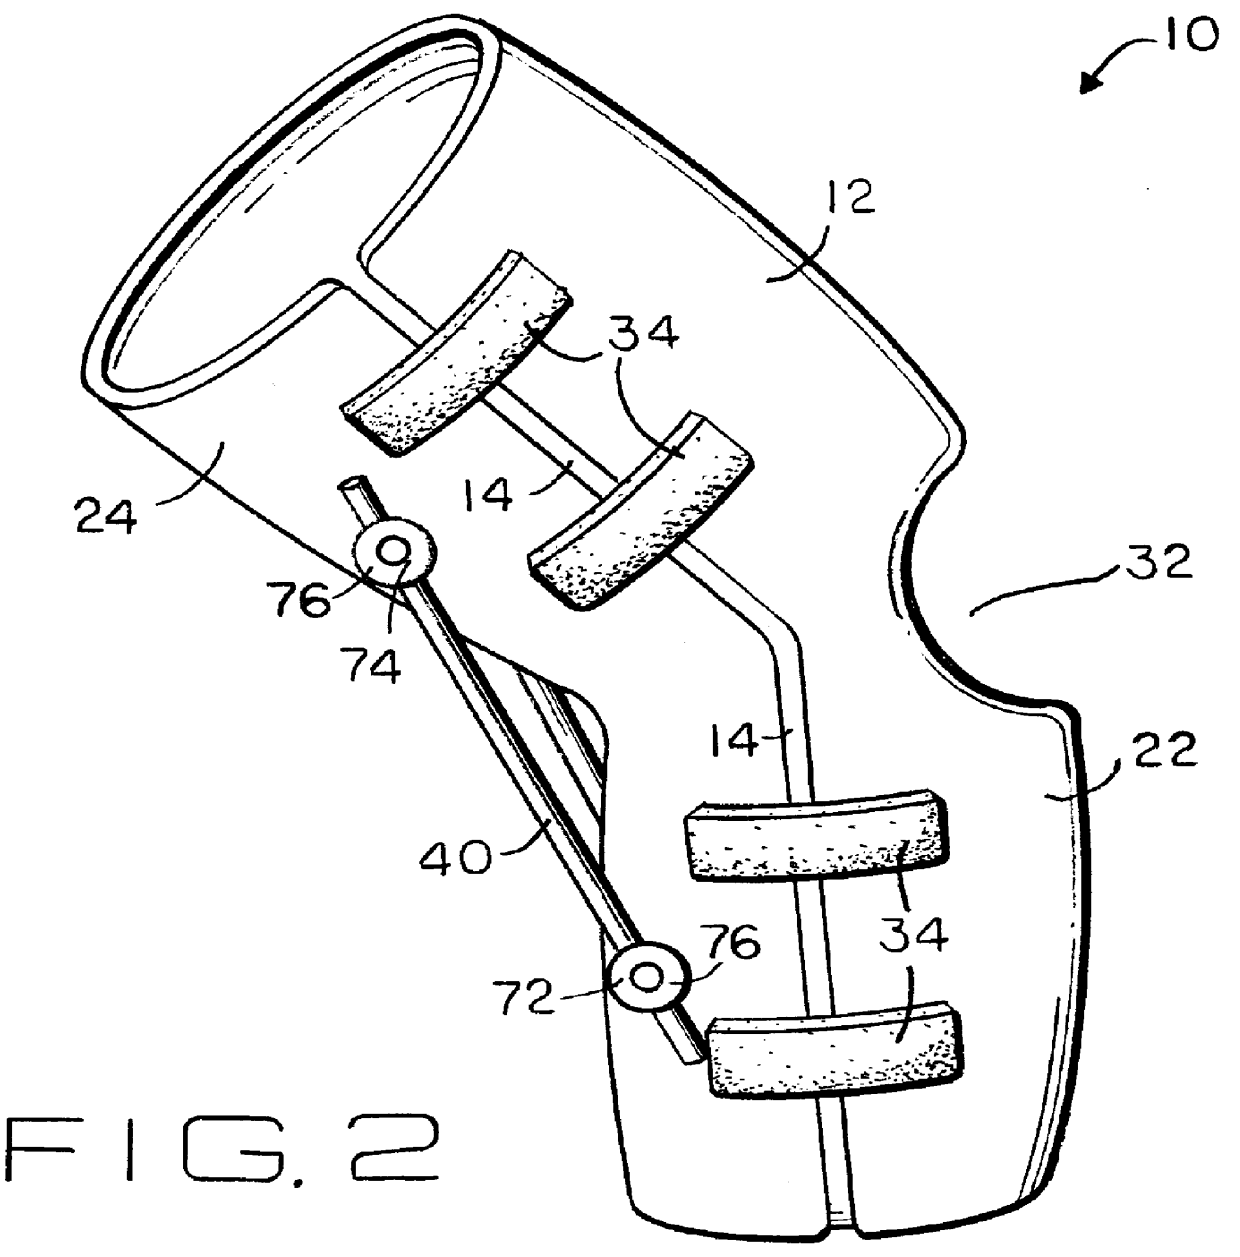 Adjustable tension joint brace apparatus